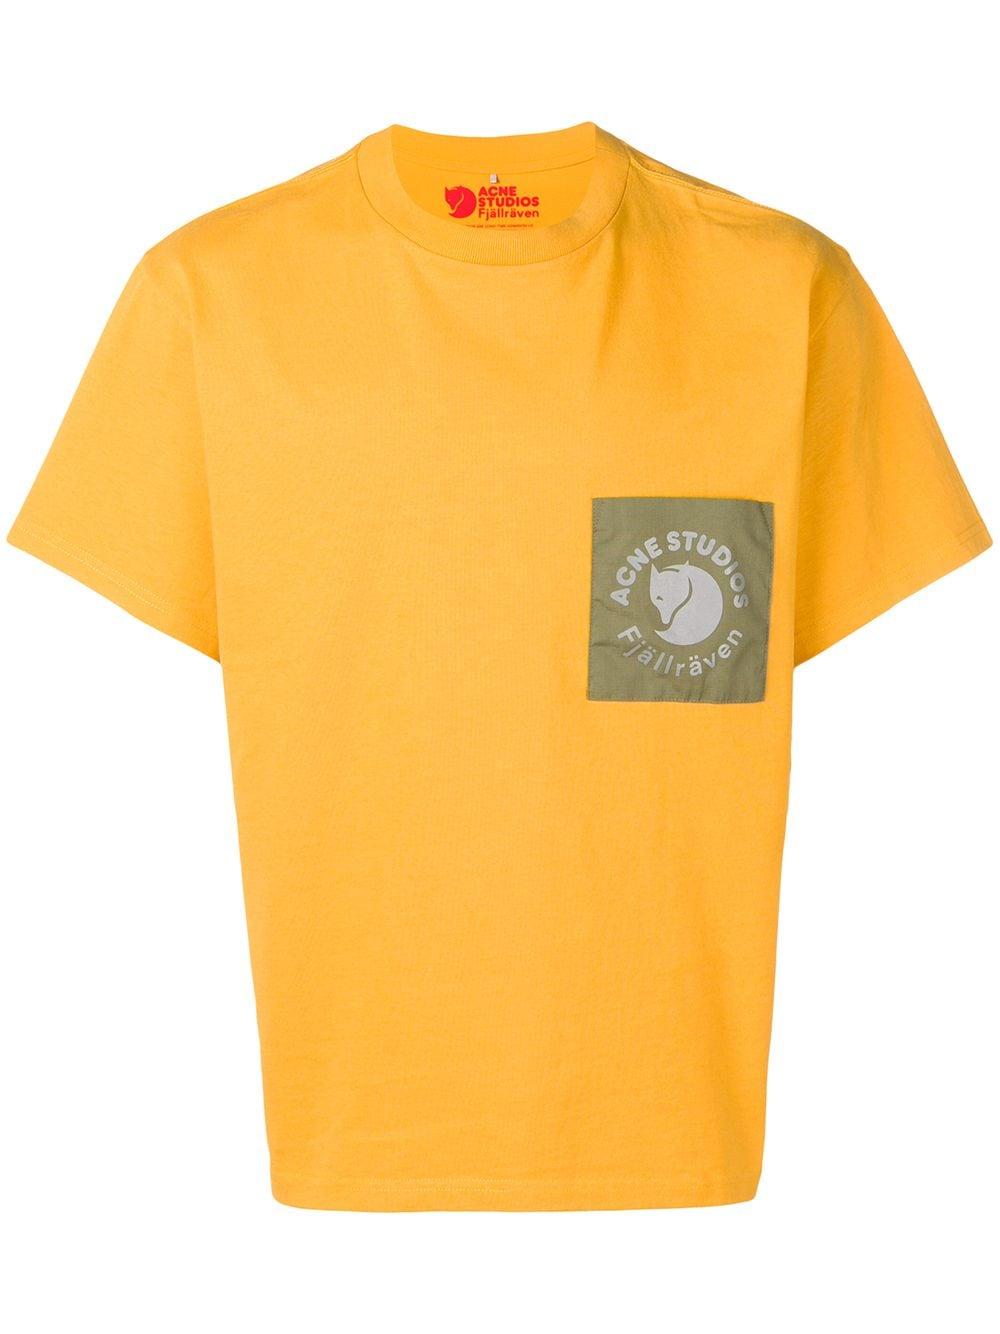 Acne Studios X Fjällräven Patch T-shirt in Yellow | Lyst Canada